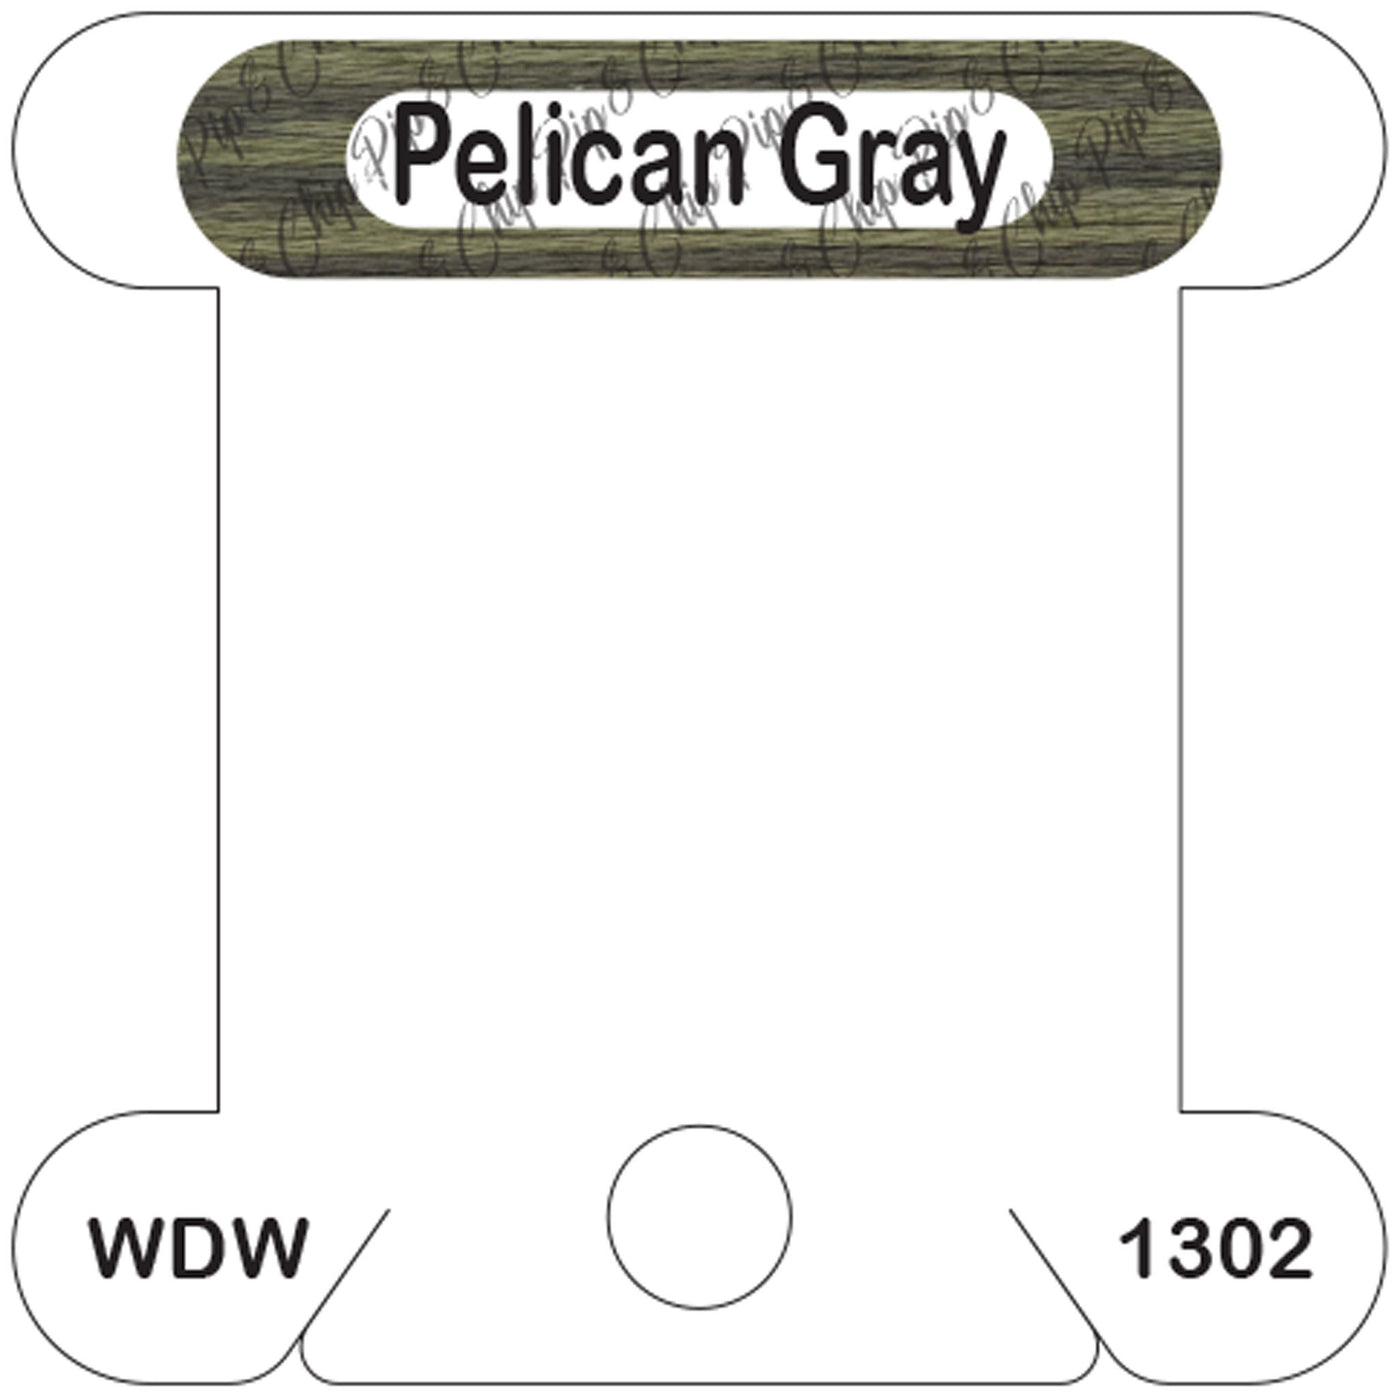 WDW Pelican Gray acrylic bobbin